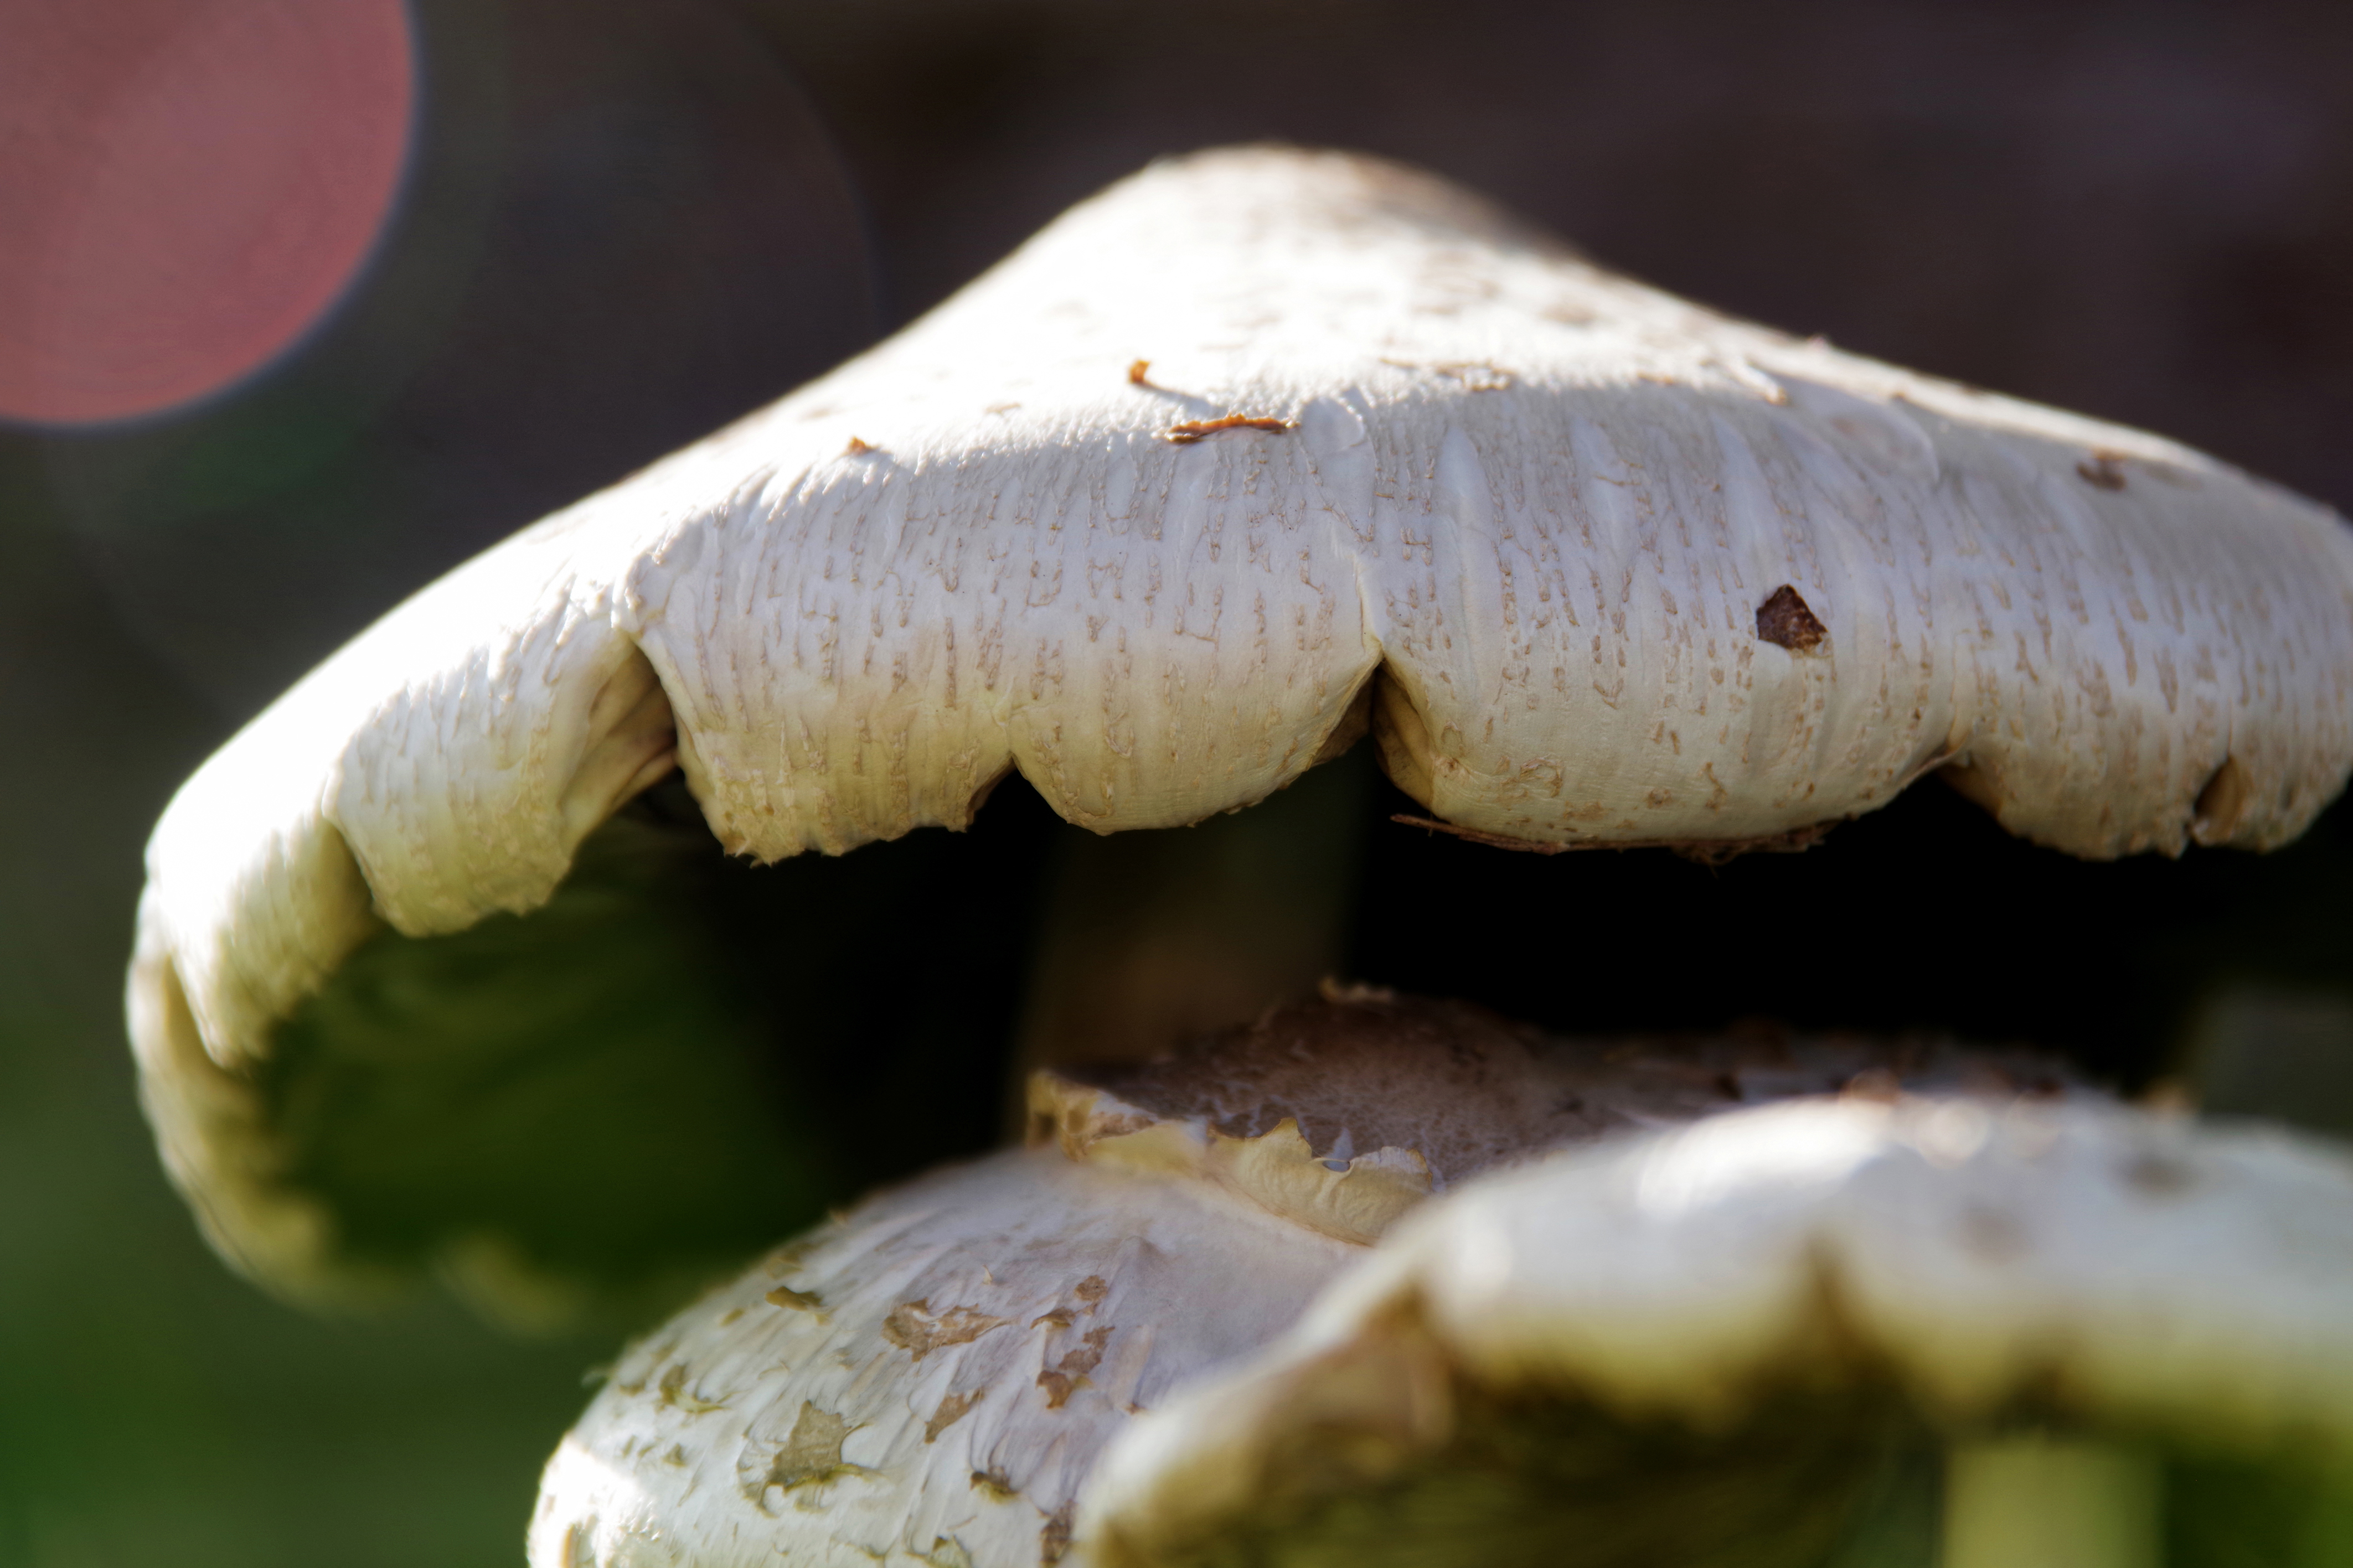 Photo by Merydeth J Myers  |  Chlorophyllum molybdites mushrooms